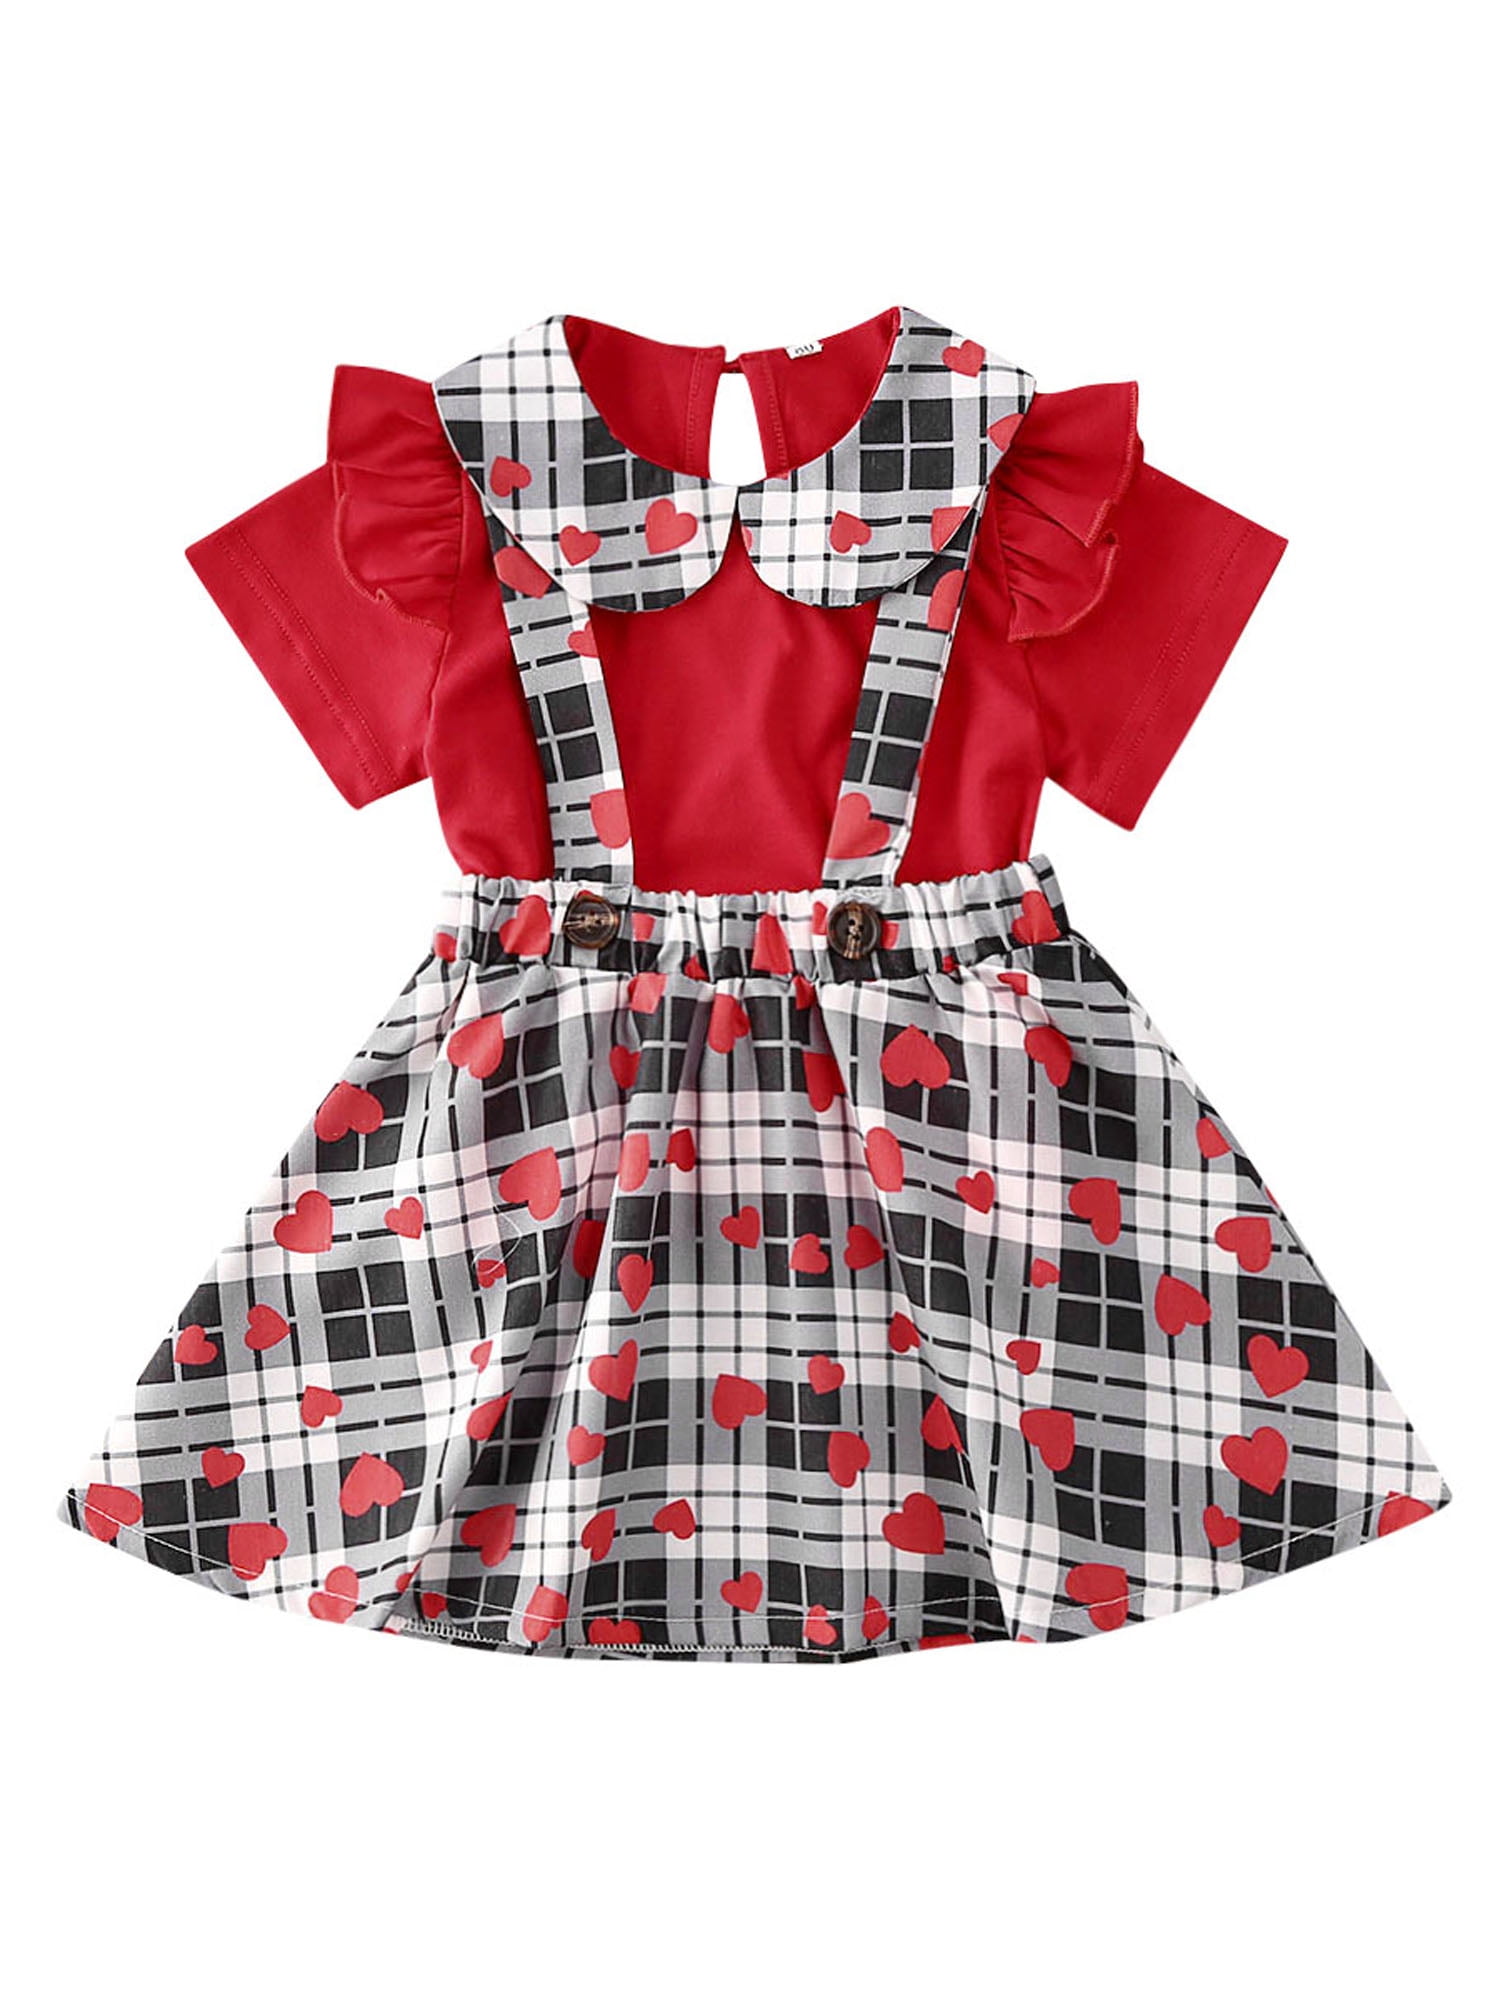 Tartan Baby Tutu Skirt Knickers Girls Niece Headband Scotland Outfit Party Gift 